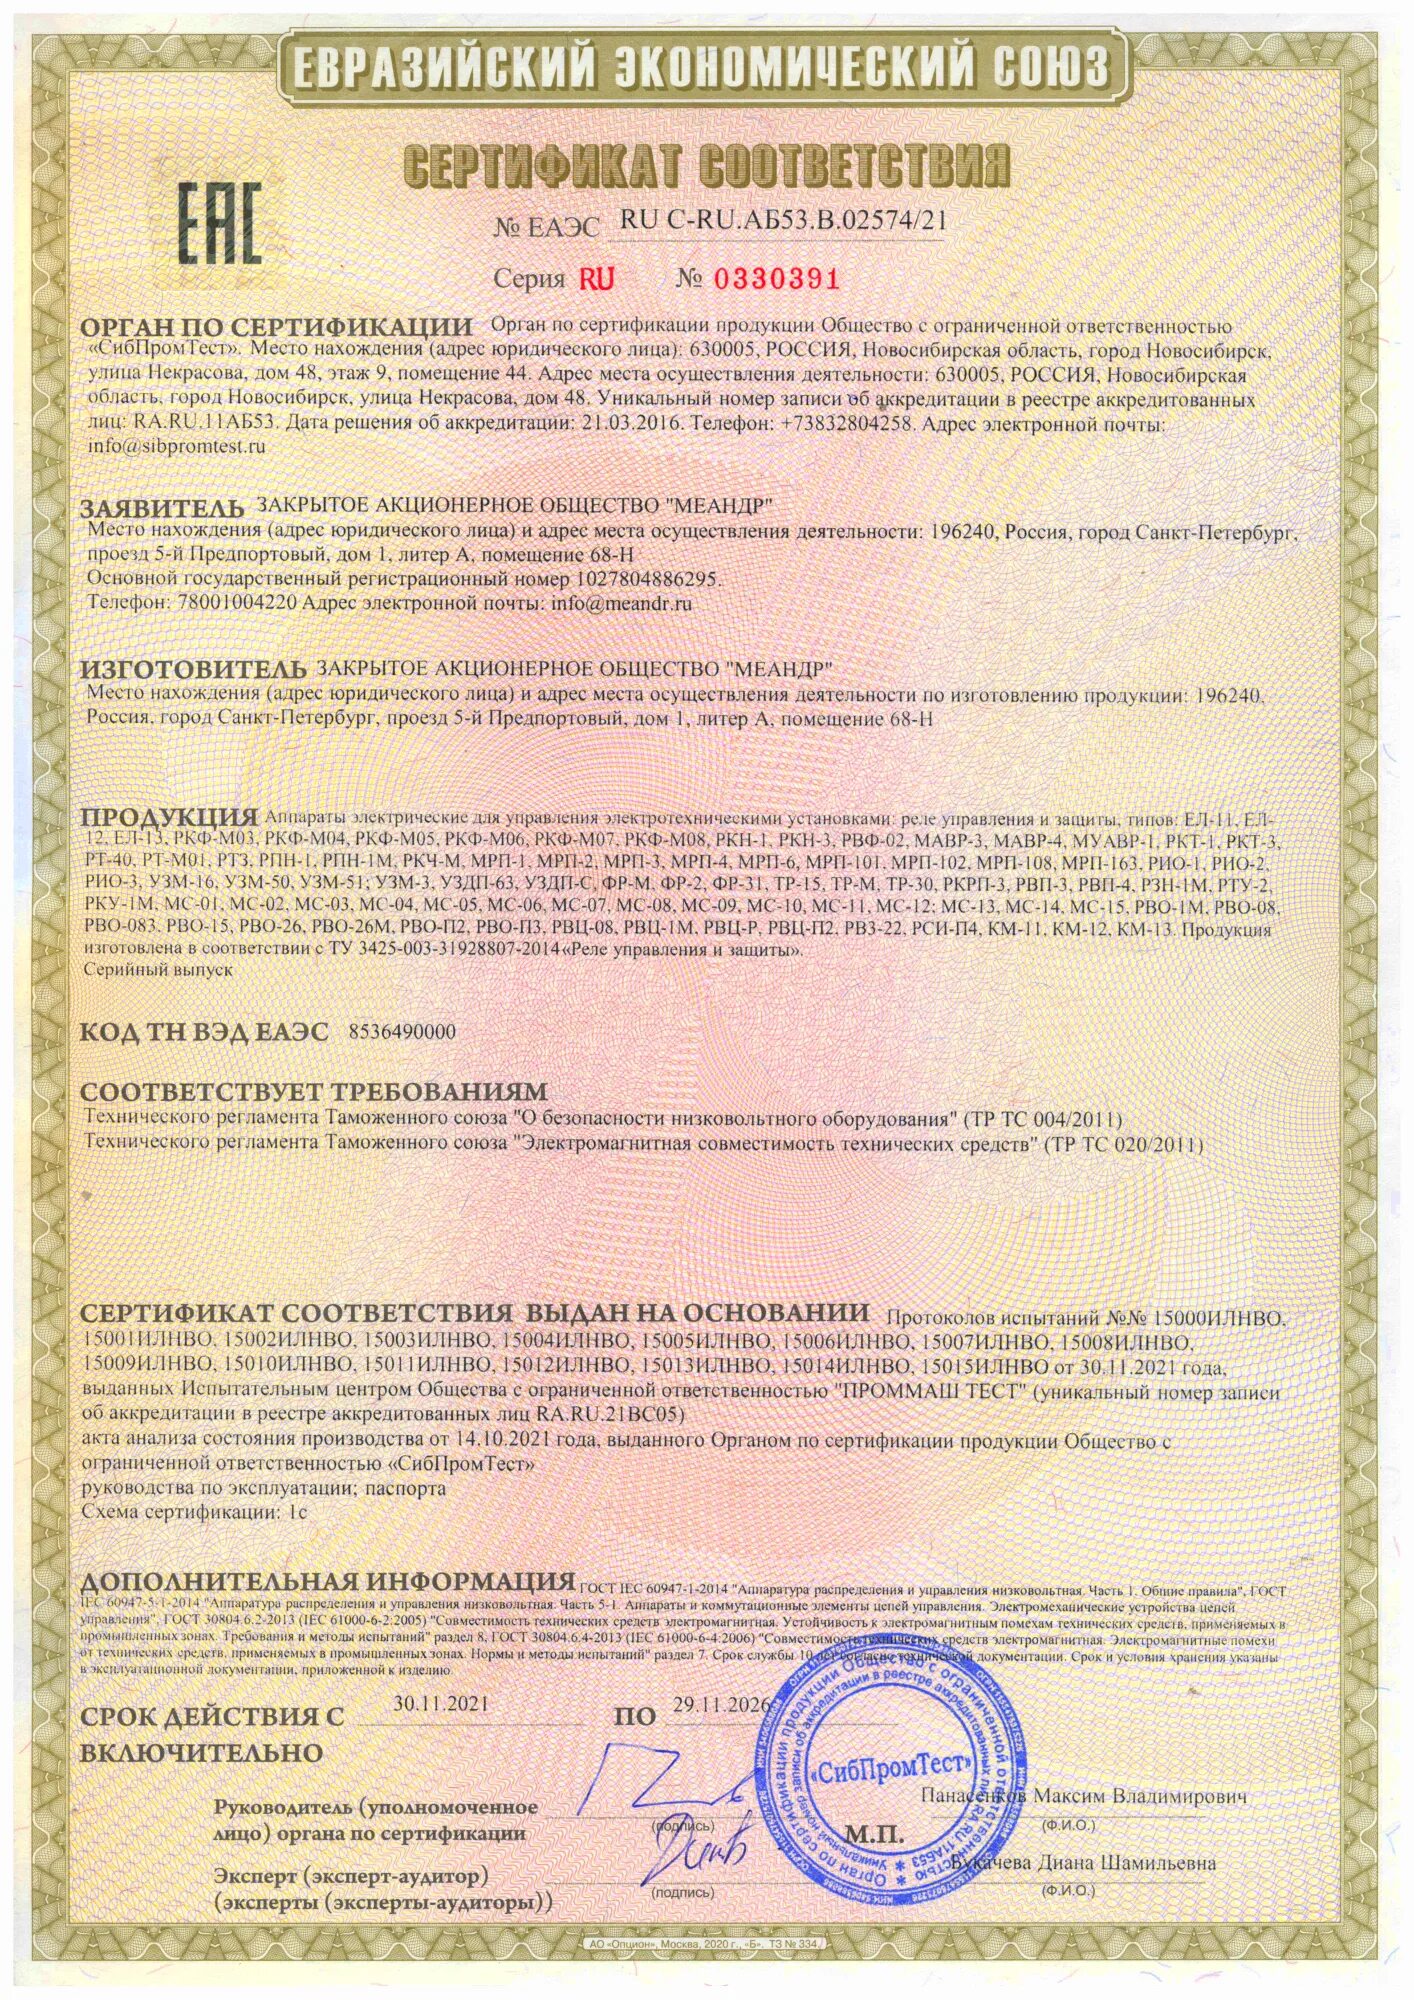 27.11 2026. Kr1 s контроллер уровня сертификат соответствия Nolta. Сертификат соответствия ra.ru.аб06.н00070. ЕАЭС kg 417/КЦА.ОСП.025.Lu.02.00085. ПДУ 3 сертификат соответствия.